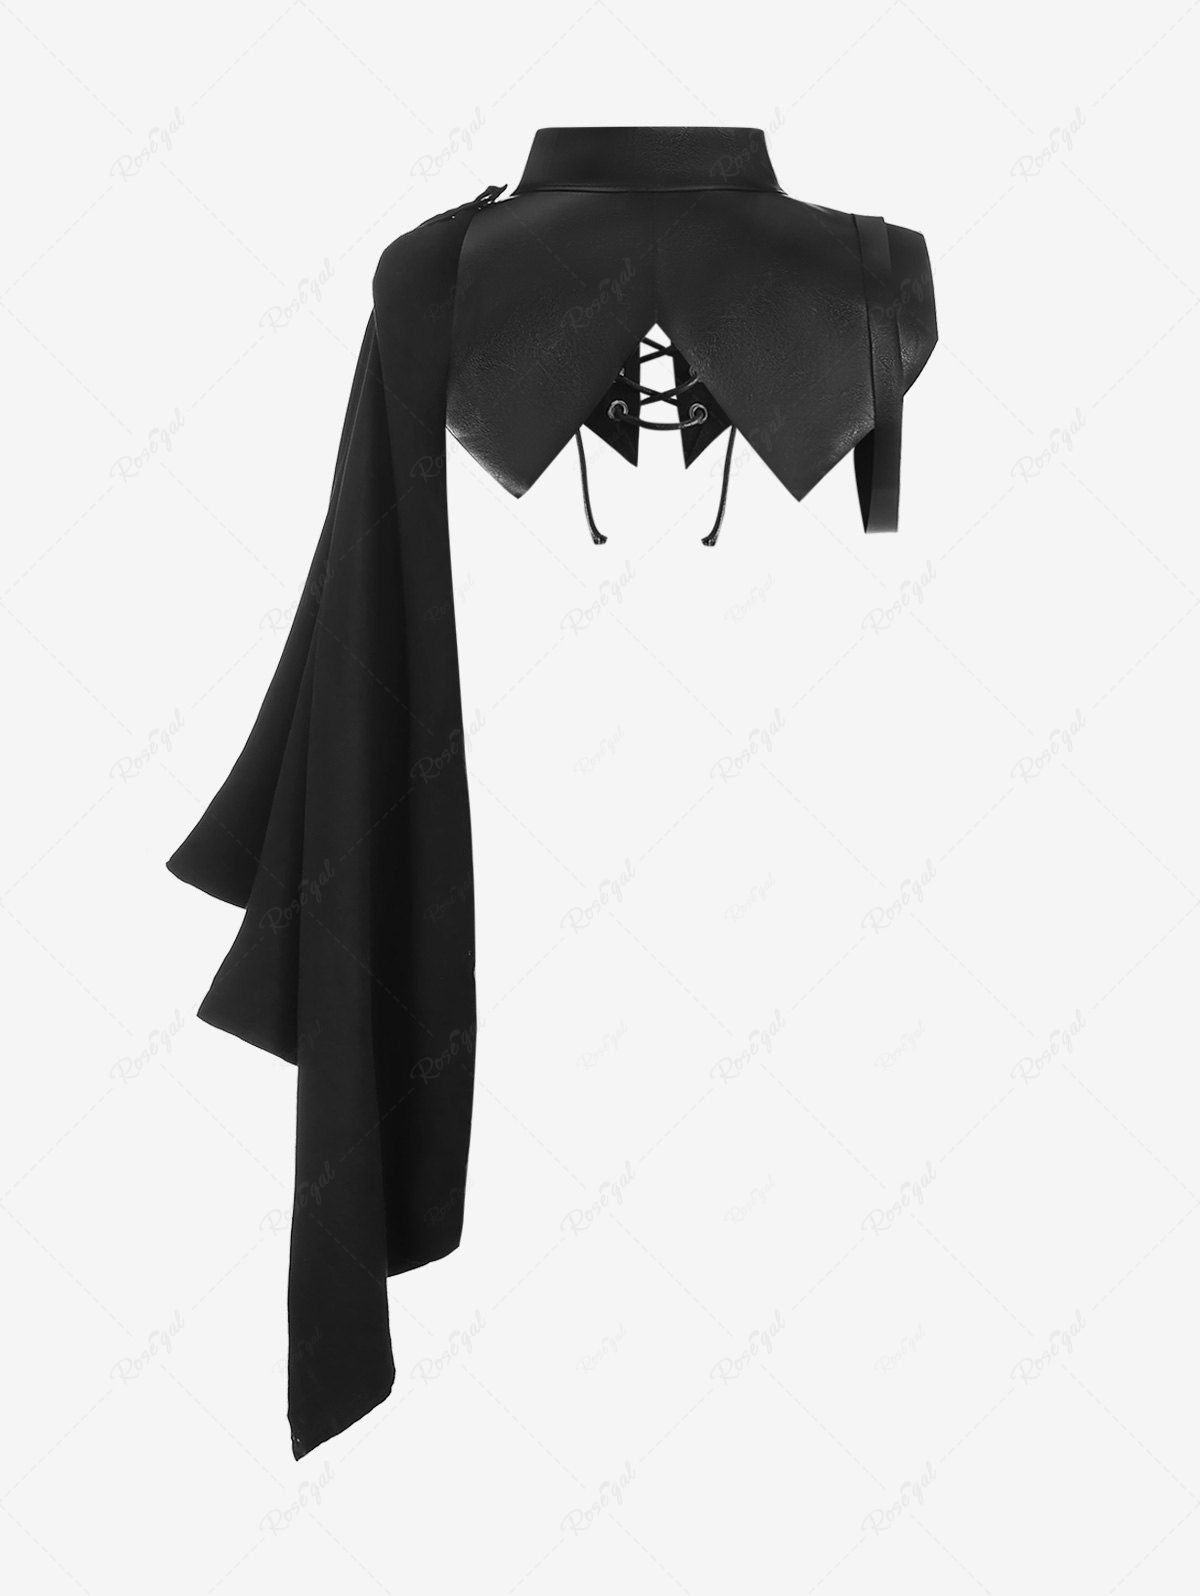 Gothic Lace Up PU Leather Asymmetrical Cape Cloak Bolero Collar Top